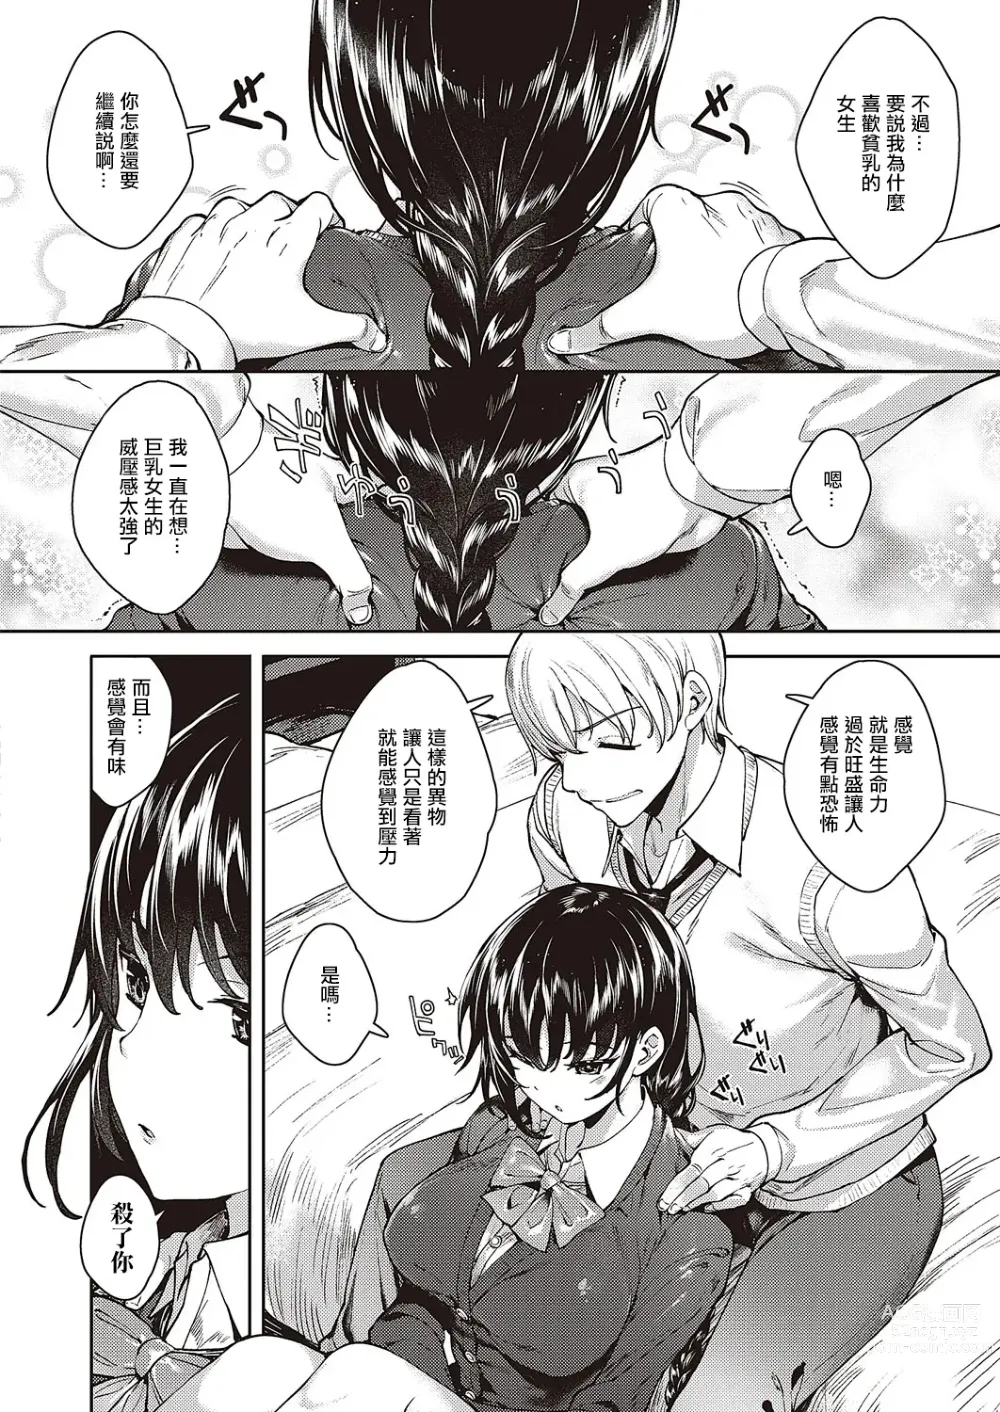 Page 4 of manga めぐりどころ 1歩